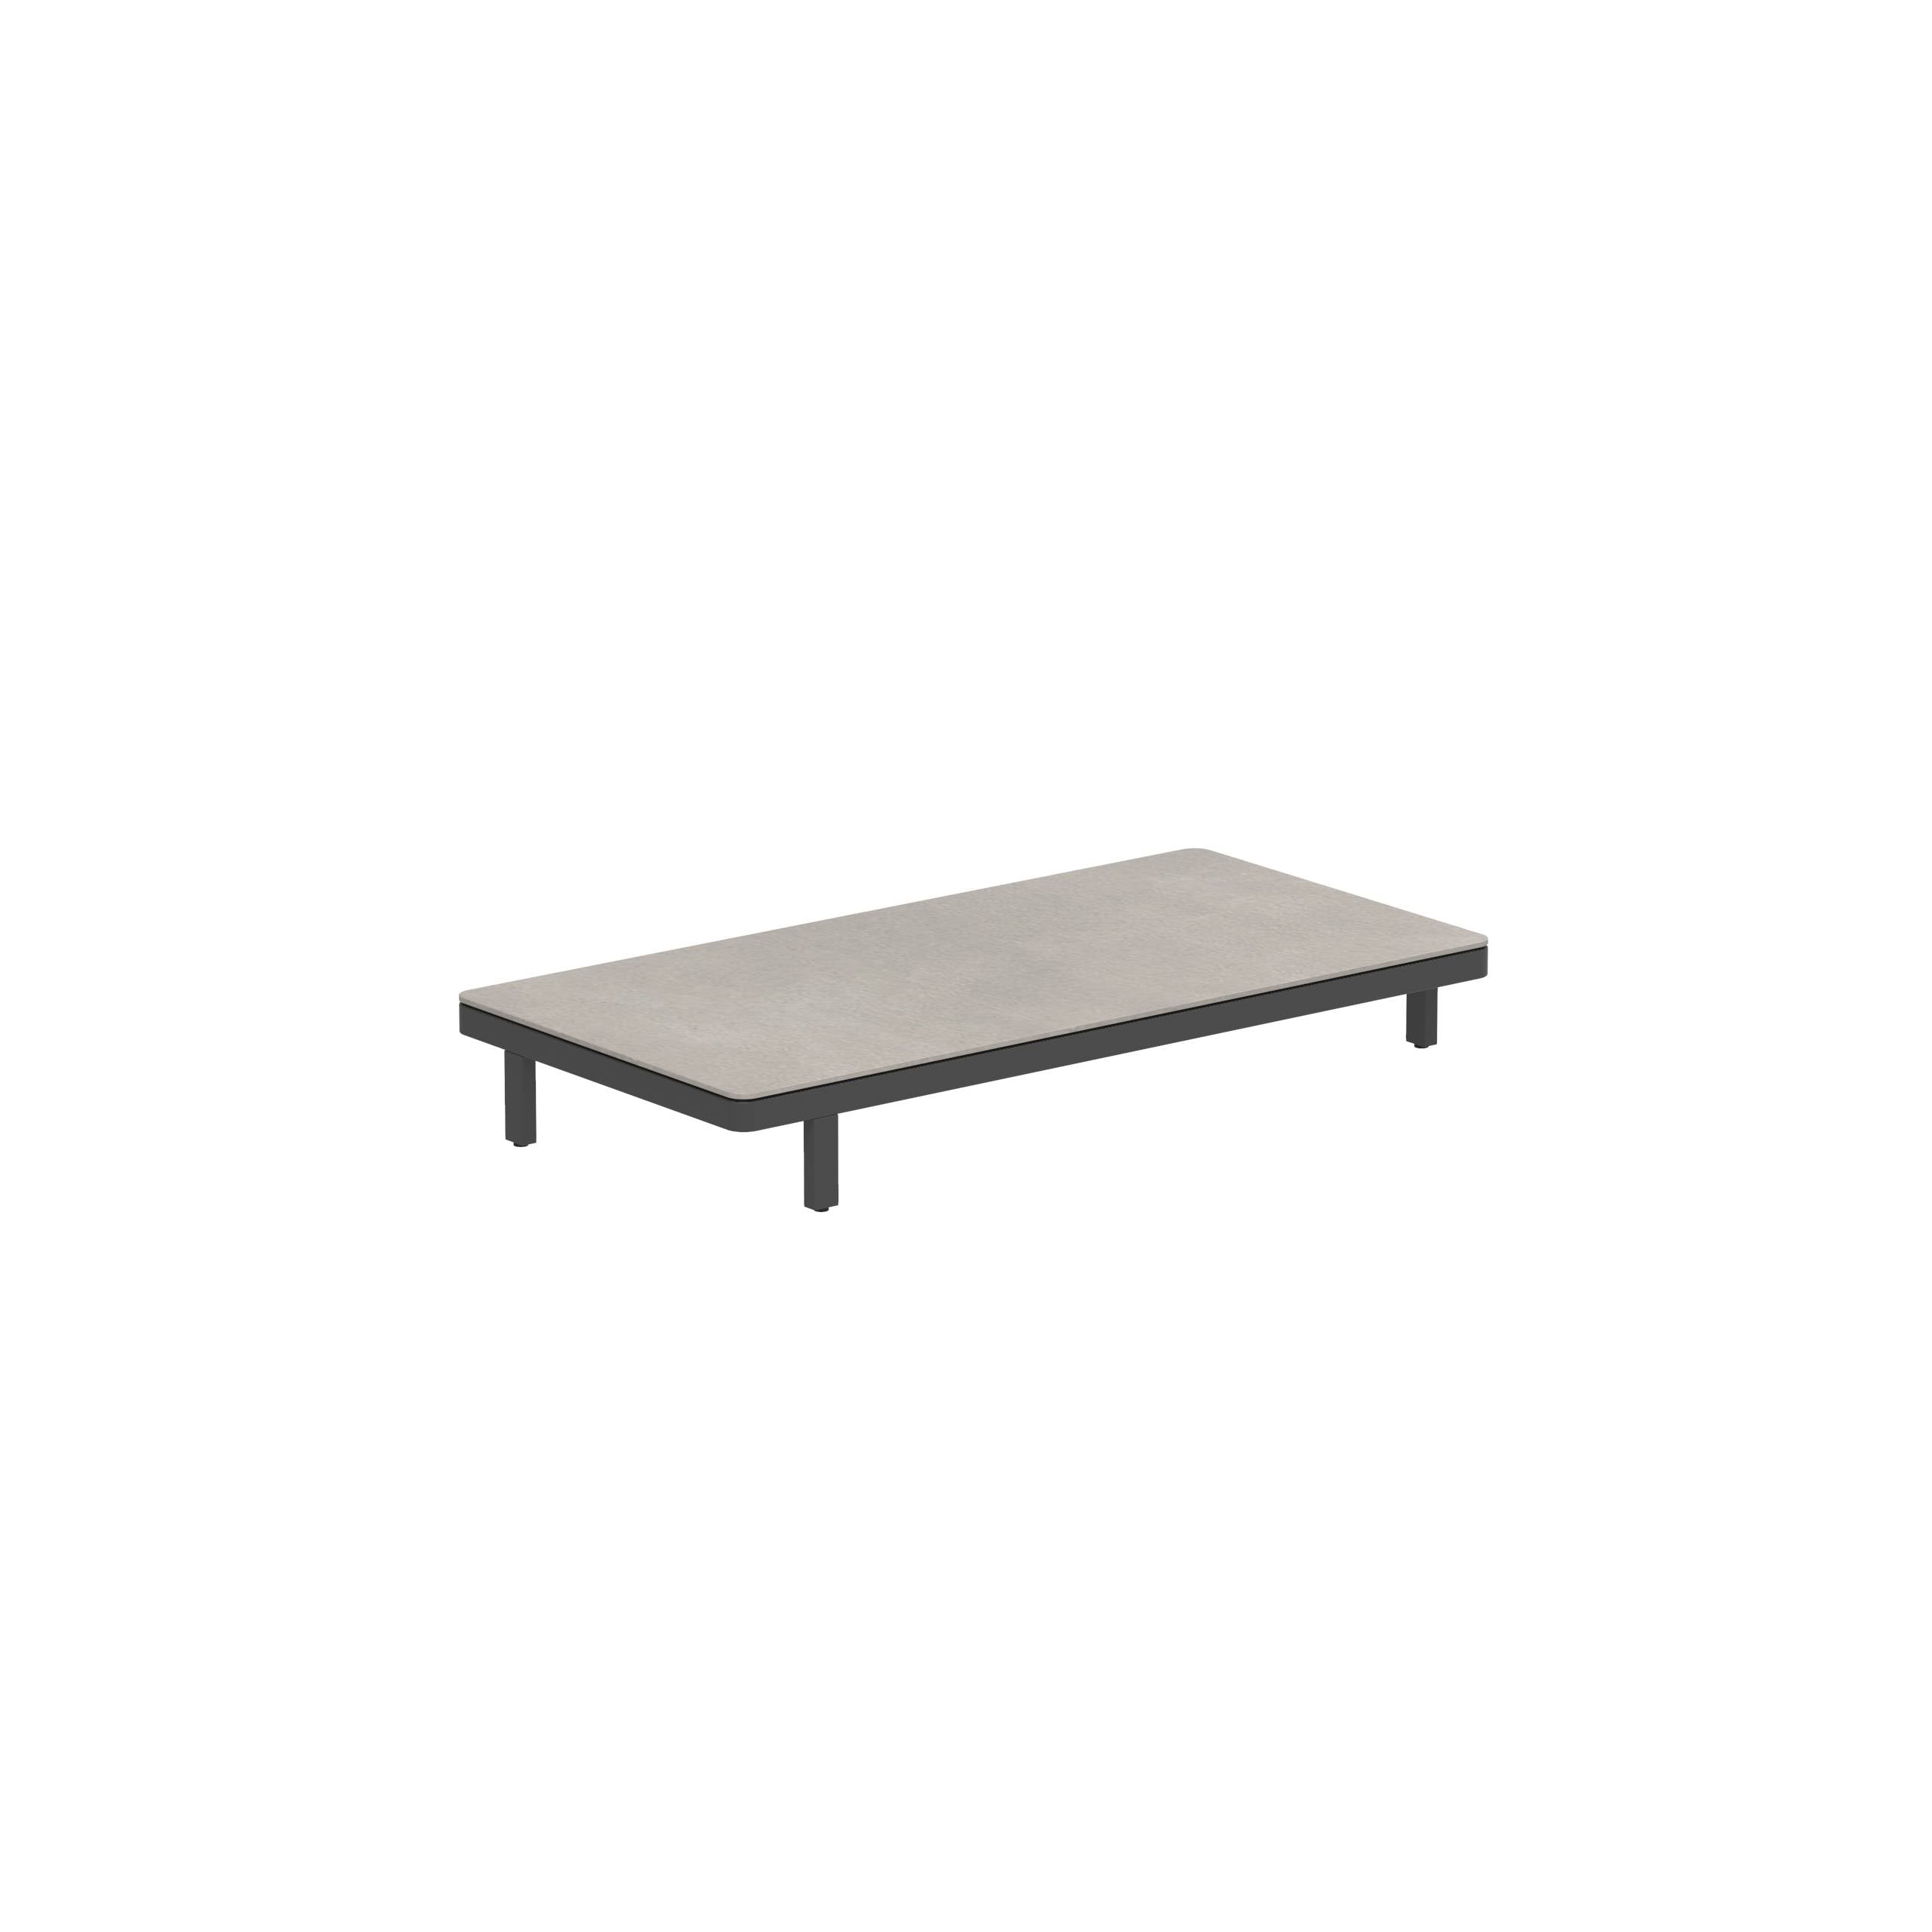 Alura Lounge 160 Ltl Table 160x80x23cm Black Ceramic Tabletop Cemento Luminoso